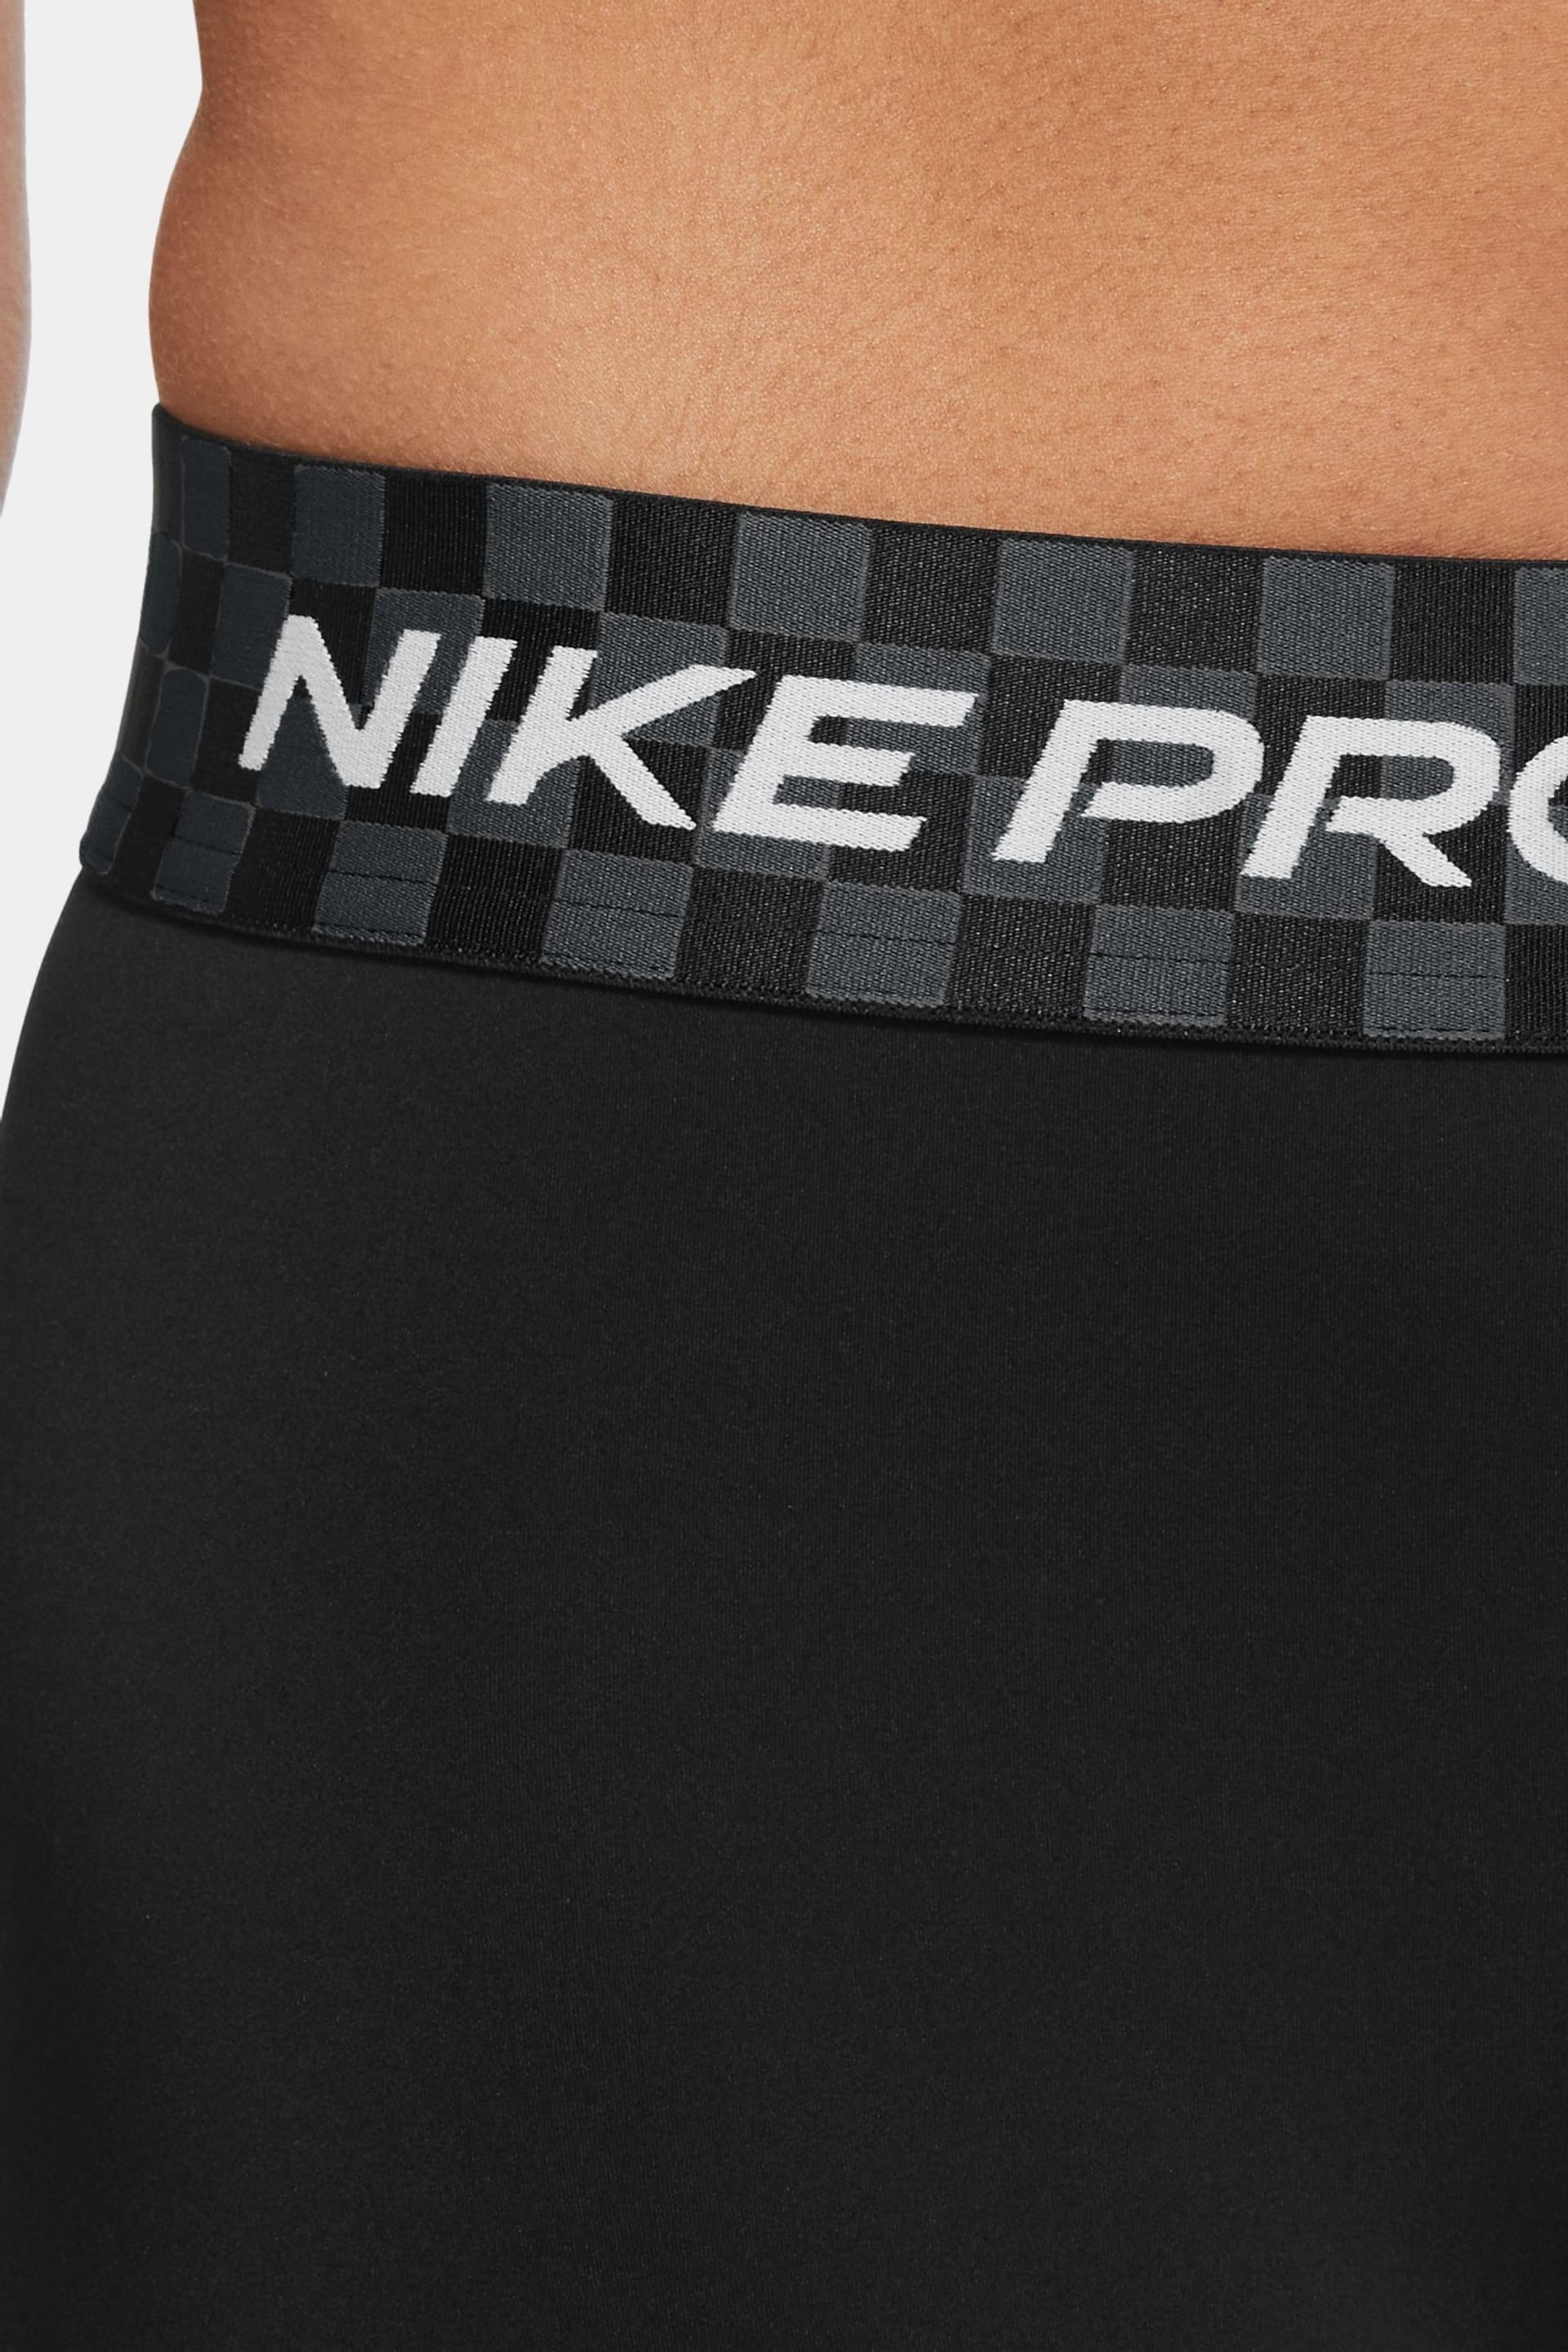 Nike Black Pro Dri-FIT 3-Inch Shorts - Image 4 of 4